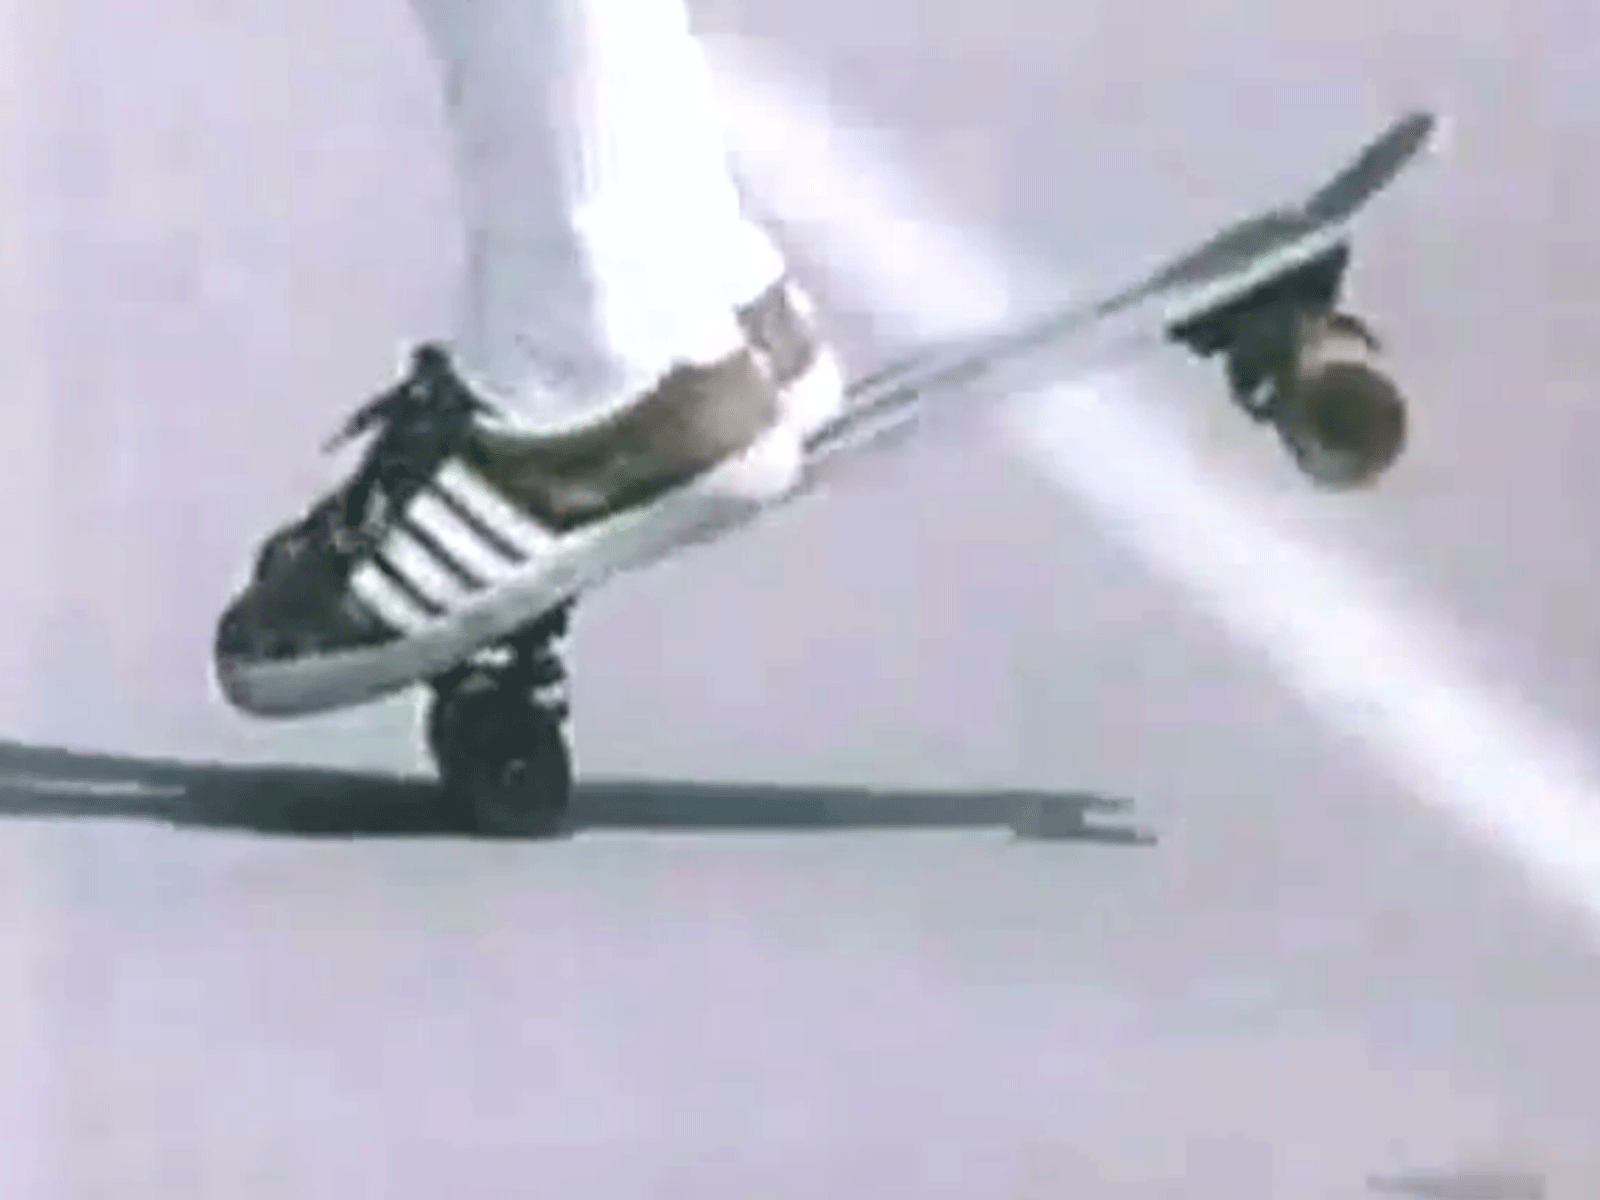 skate3